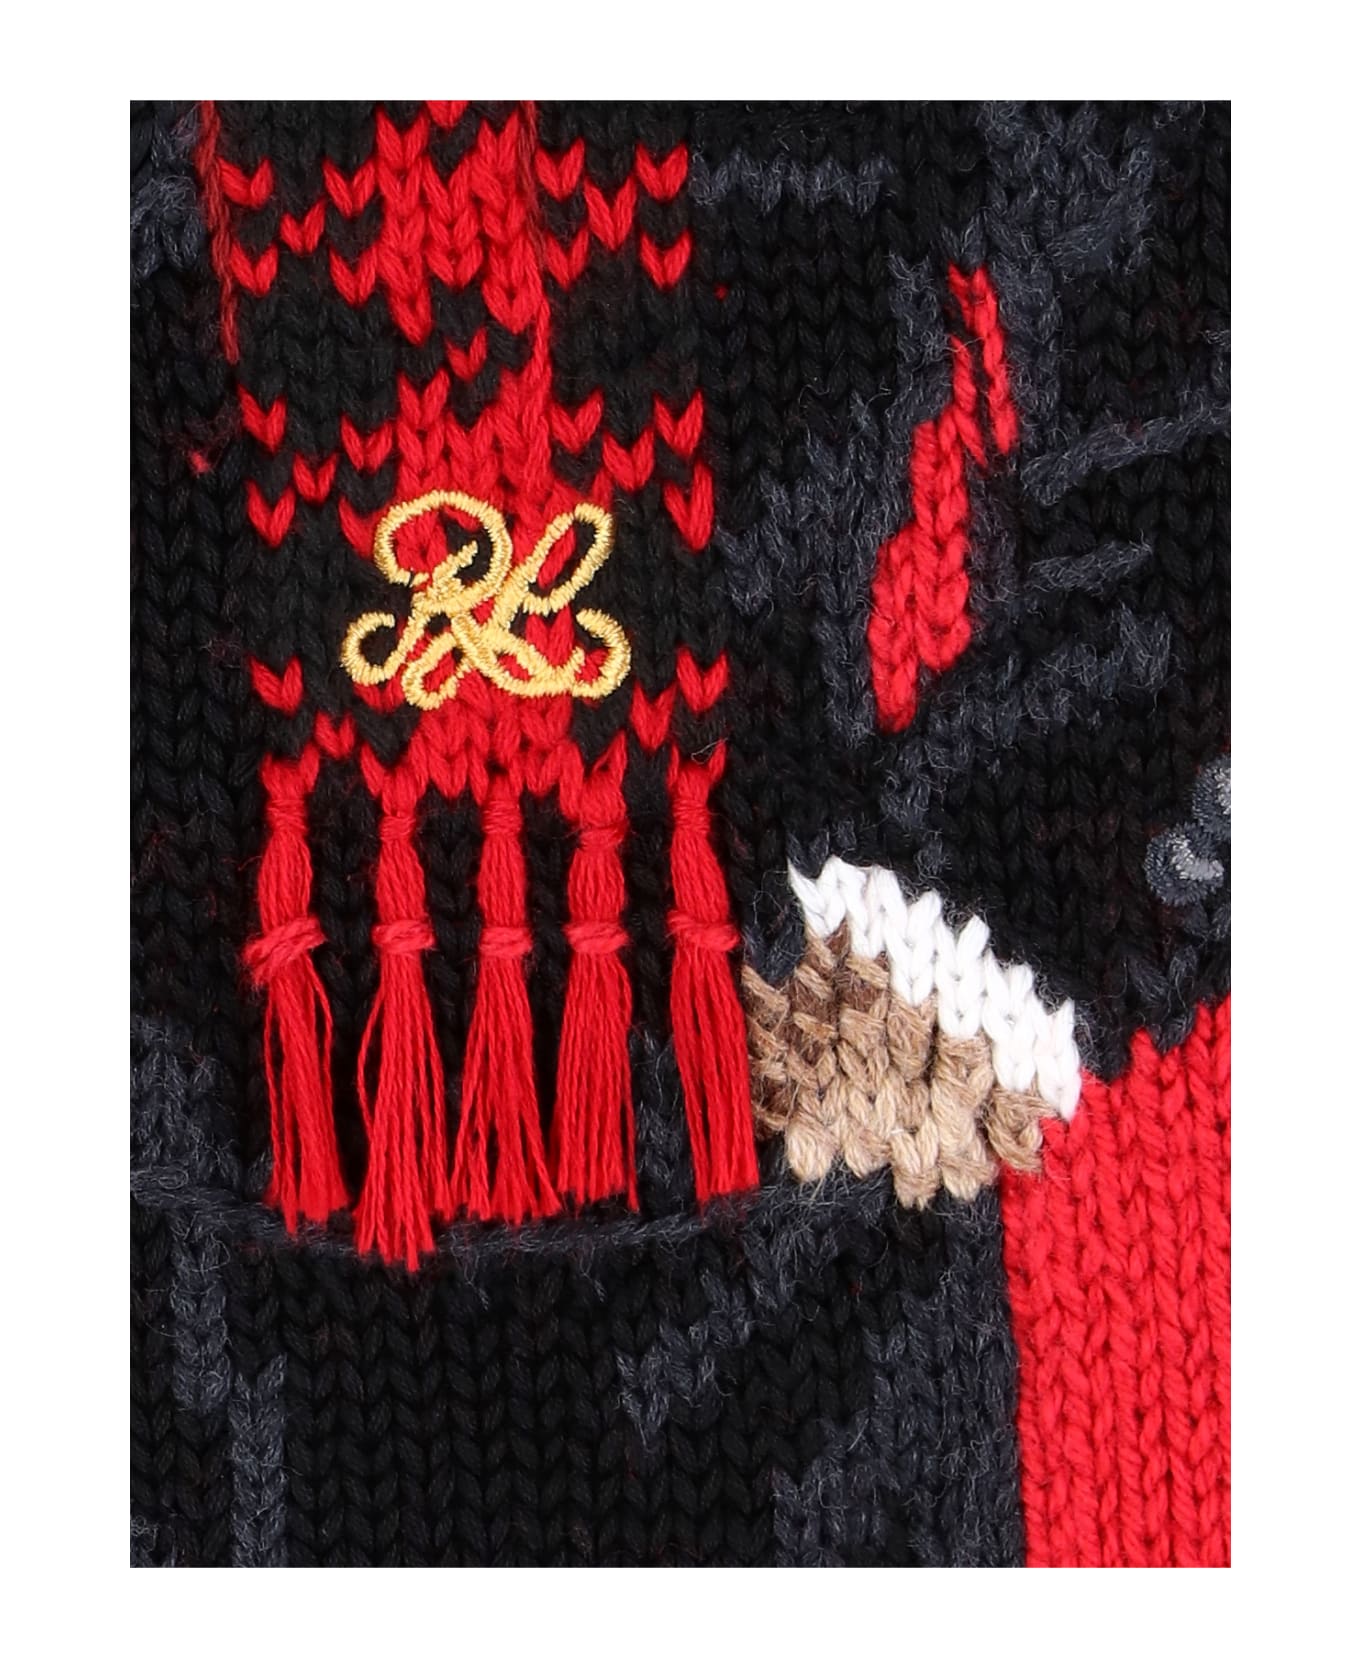 Polo Ralph Lauren Sweater - Red